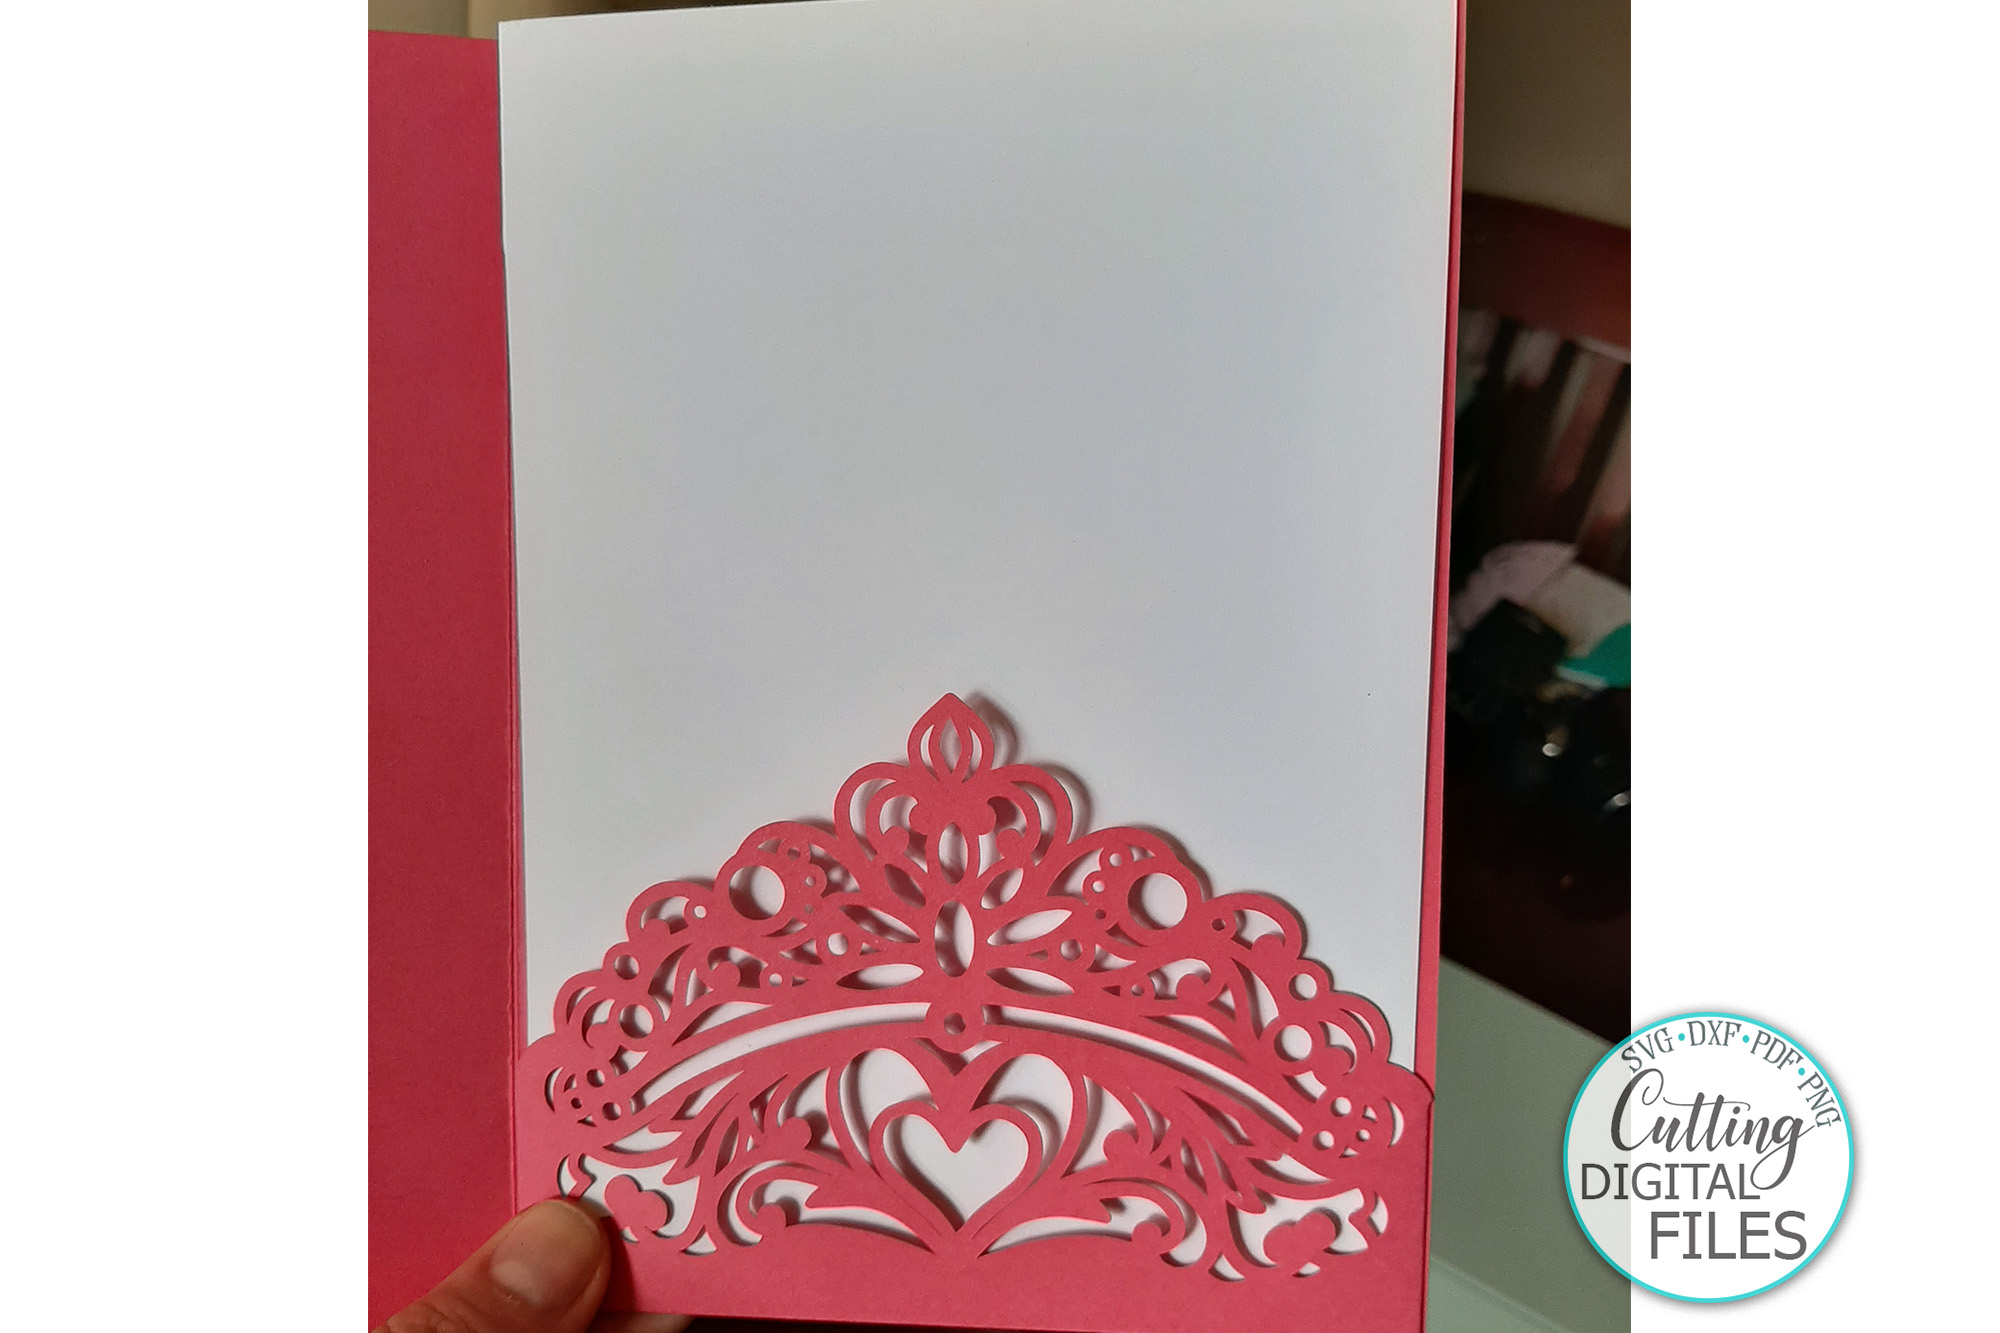 Download Princess Bride Crown Wedding invitation Trifold template svg